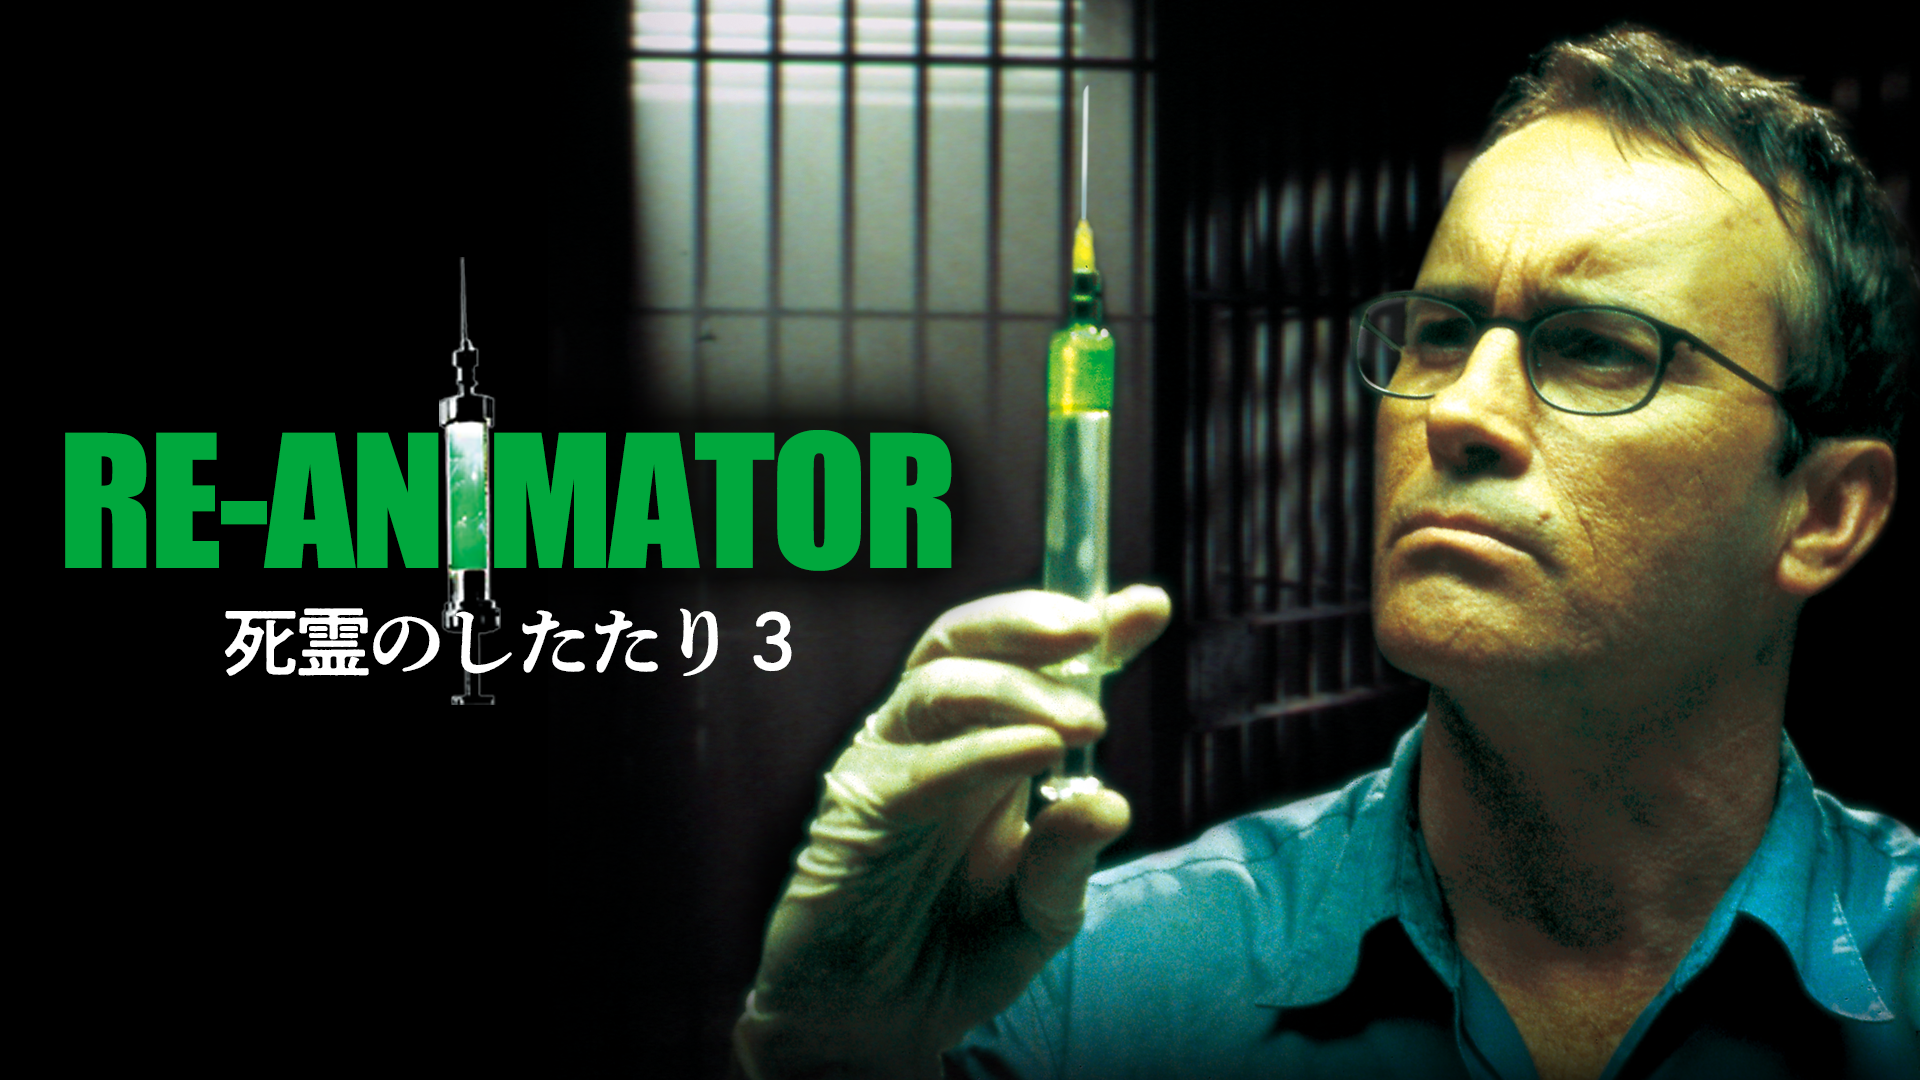 RE-ANIMATOR 死霊のしたたり３(洋画 / 2003) - 動画配信 | U-NEXT 31日間無料トライアル